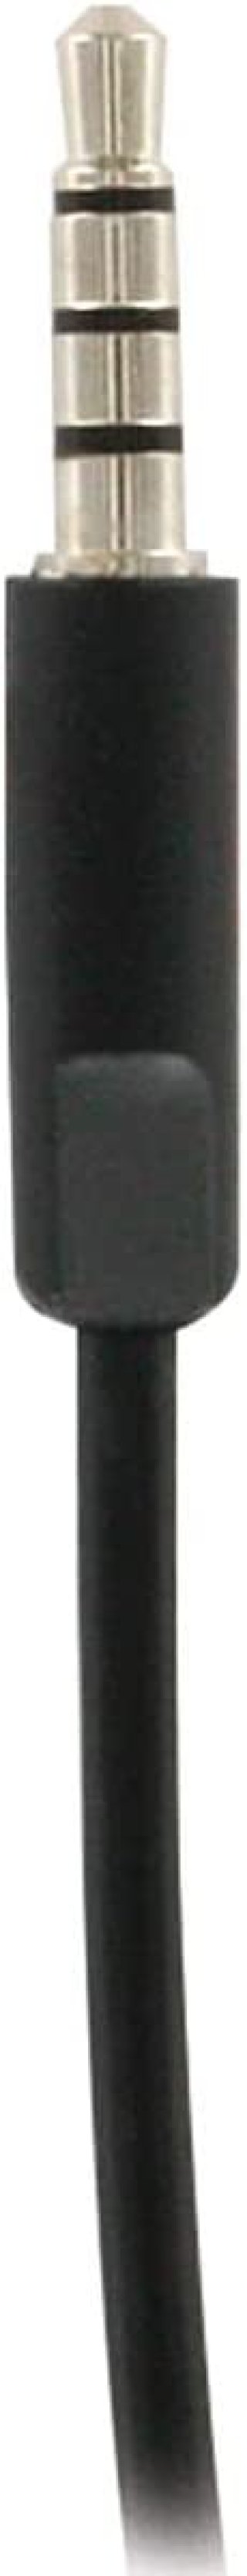 Logitech H151 Mikrofonos headset - fekete